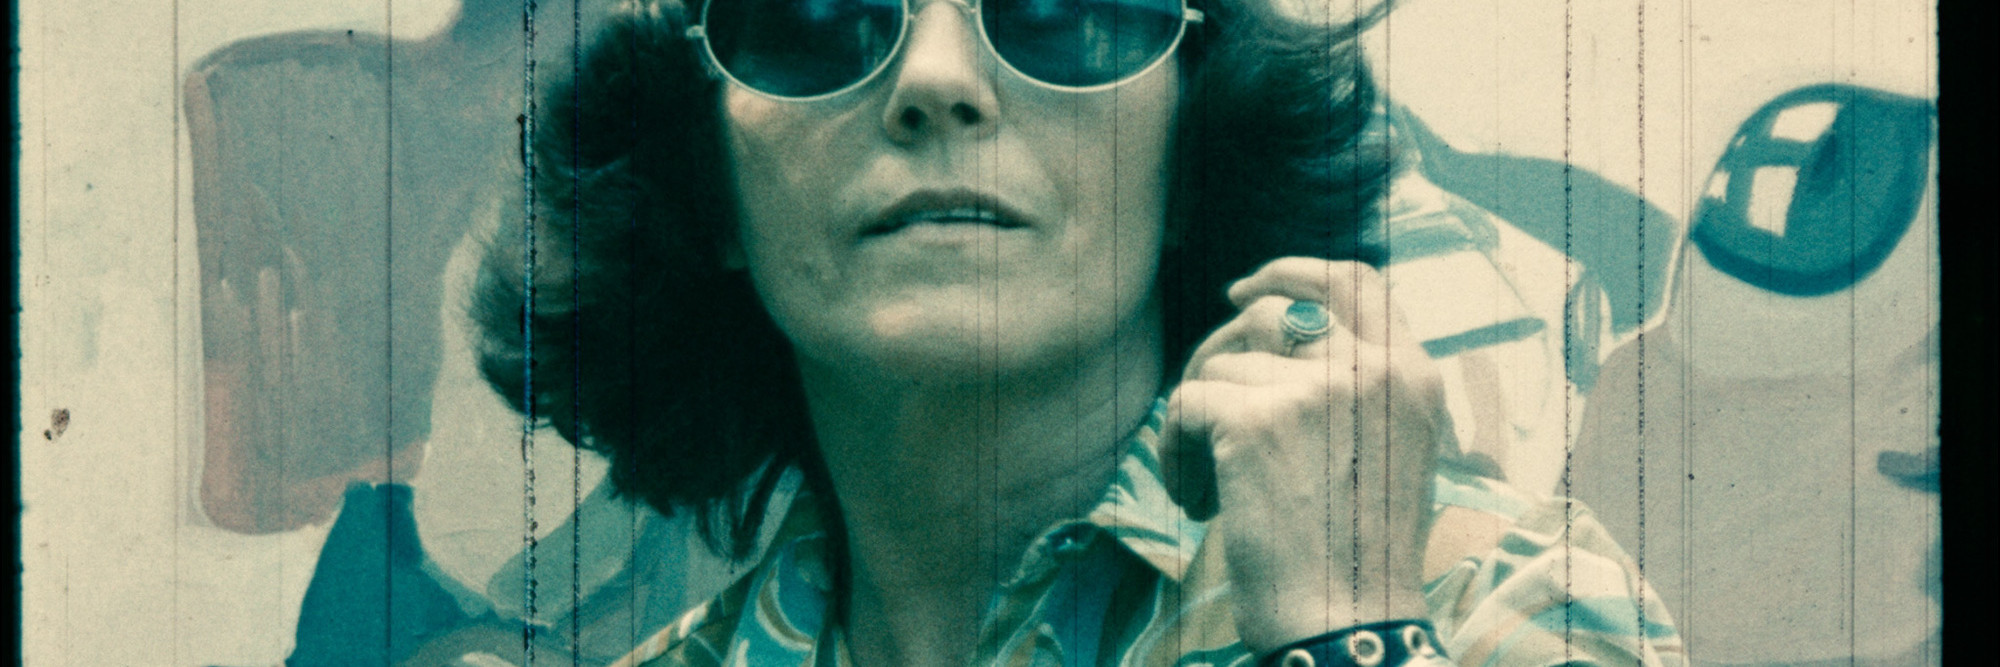 Kopf. c. 1976. USA. Directed by Maria Lassnig. Courtesy of the Maria Lassnig Foundation. © 2018 Maria Lassnig Foundation